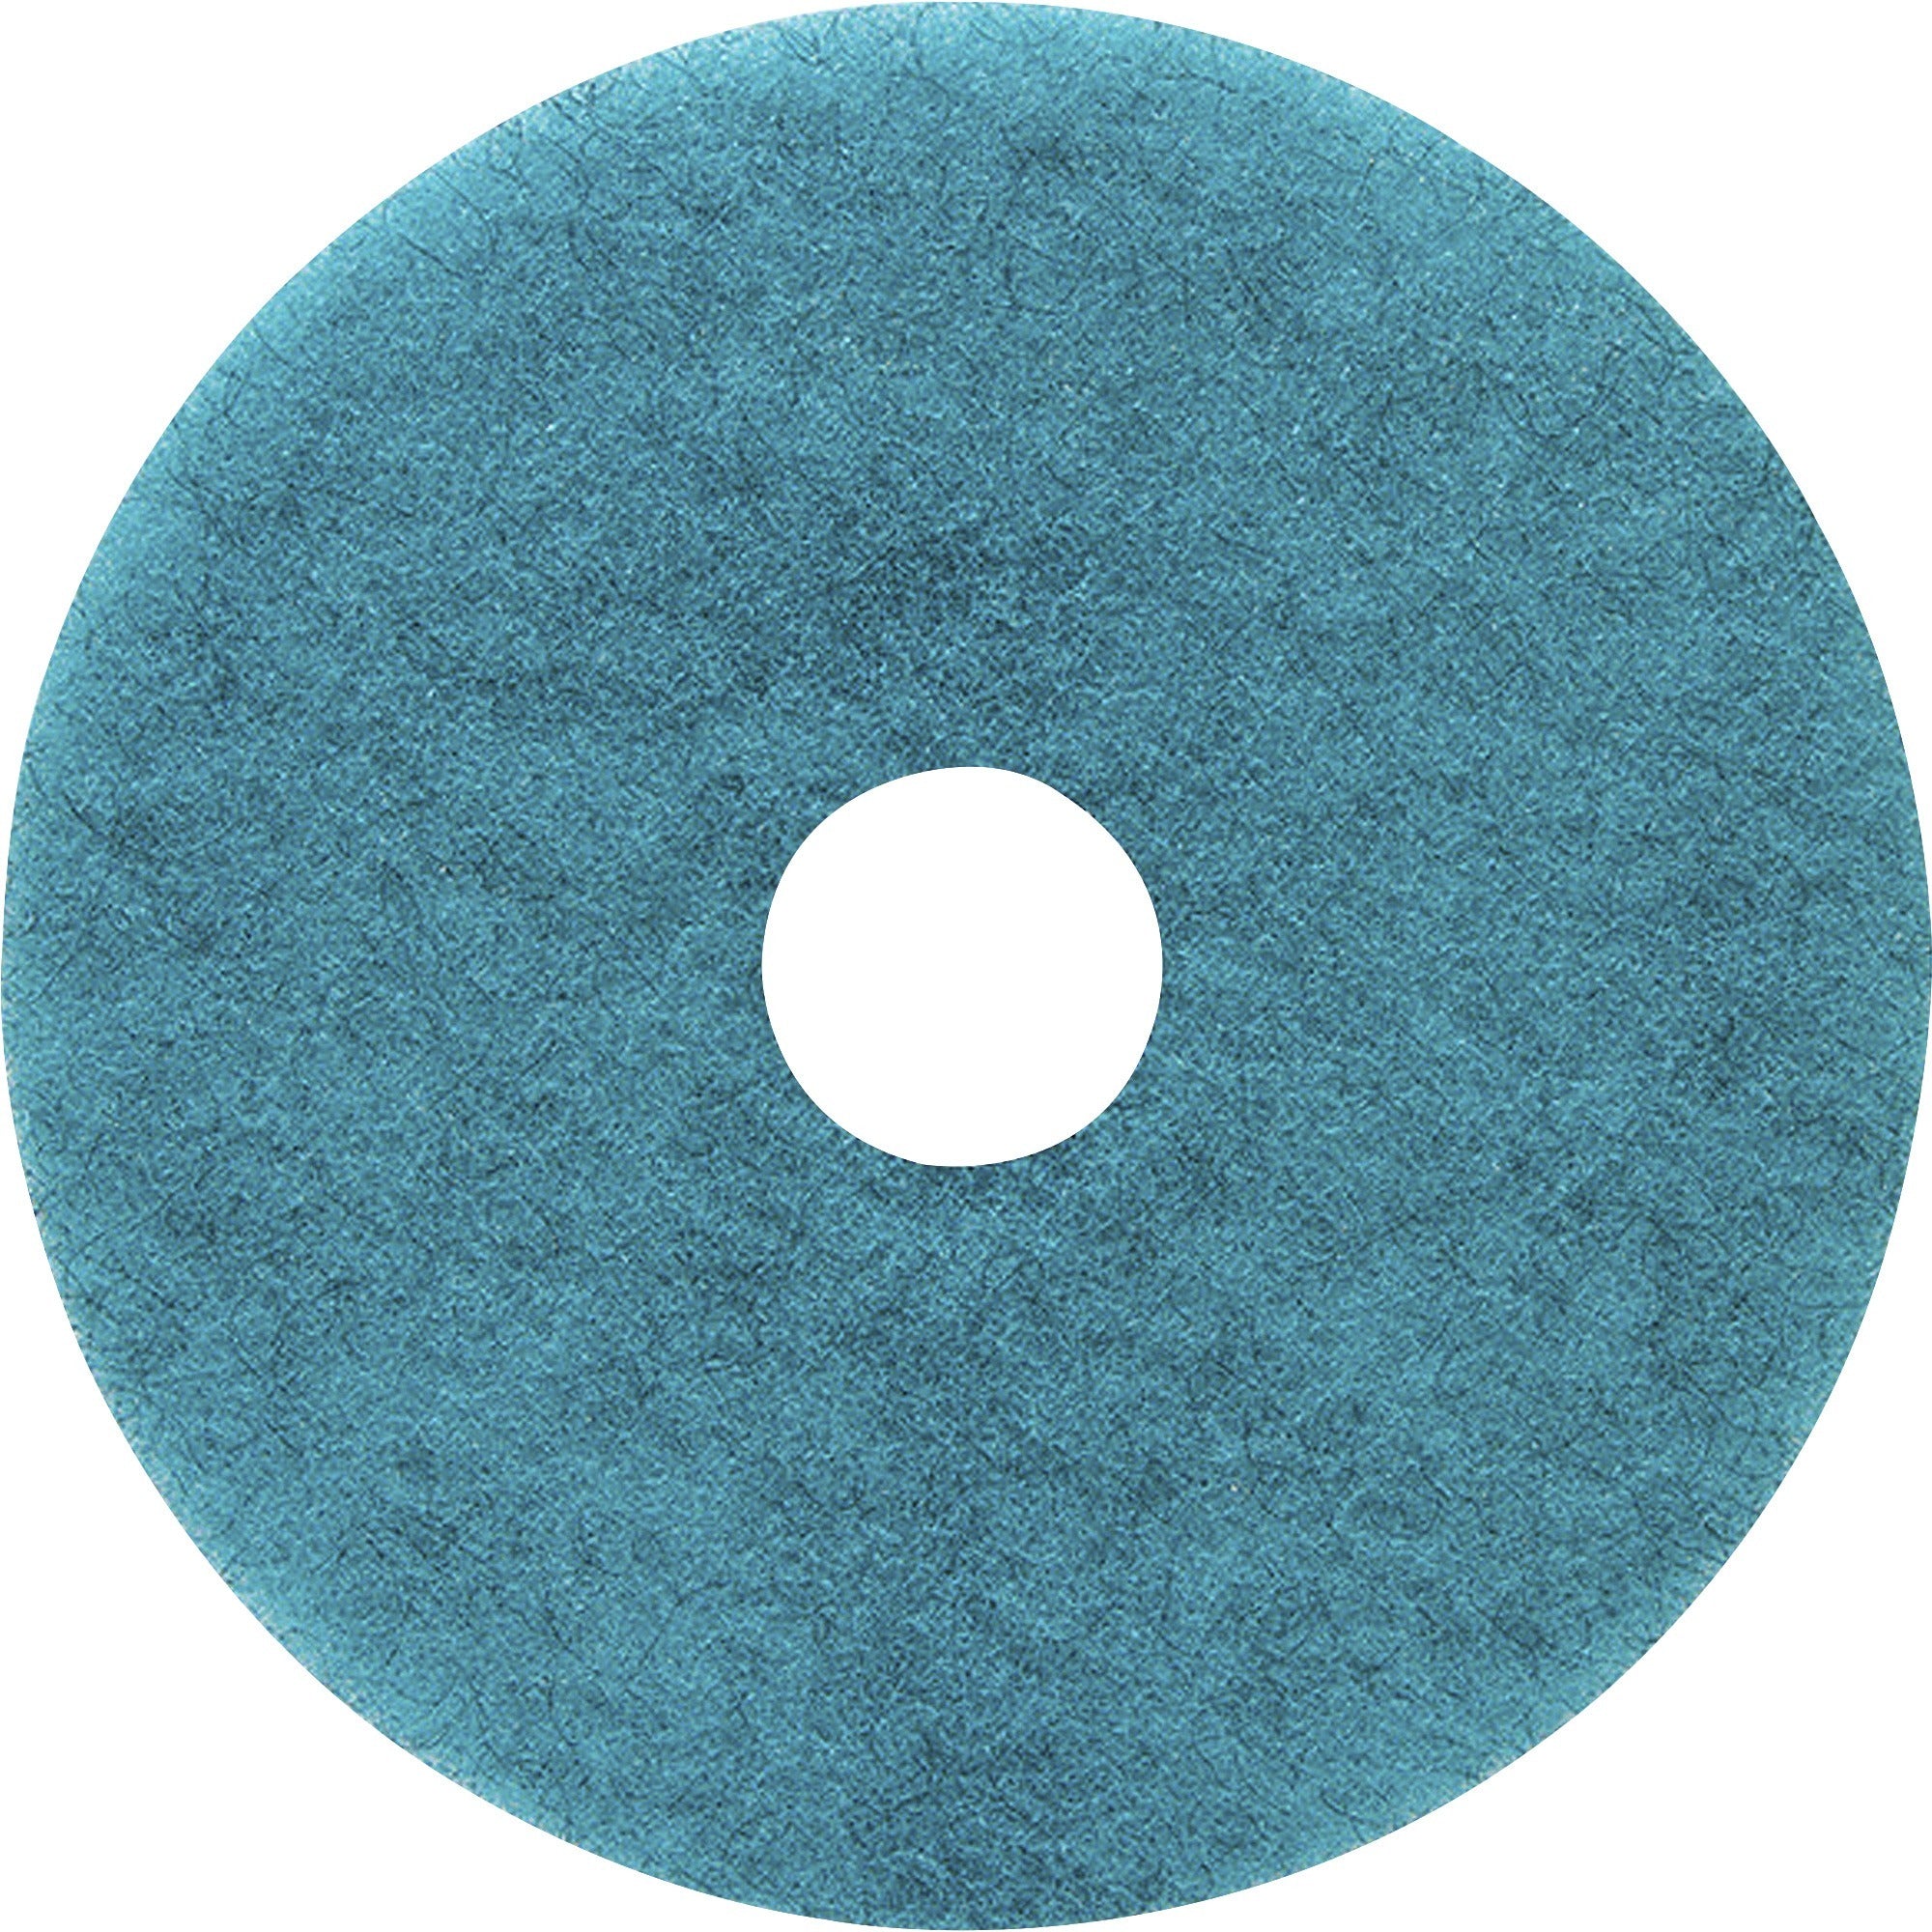 genuine-joe-burnish-floor-pad-5-carton-round-x-17-diameter-floor-1200-rpm-to-3000-rpm-speed-supported-resin-fiber-blue_gjo18396 - 1